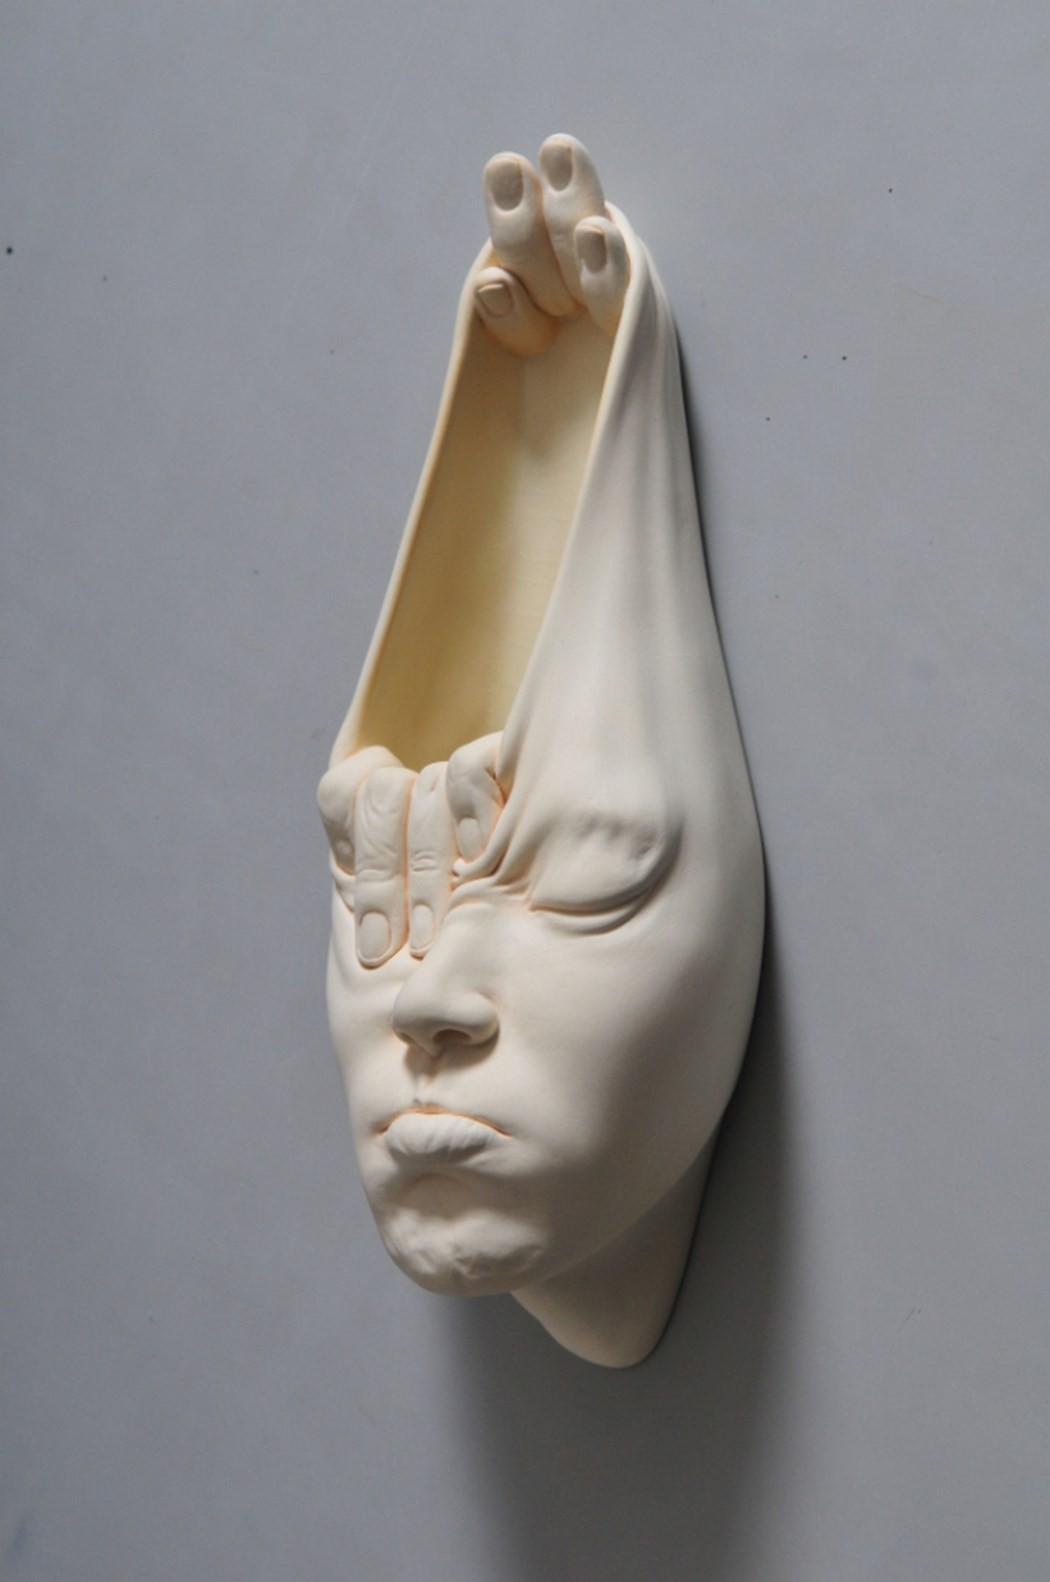 9 ceramic sculpture byjohnson tsang